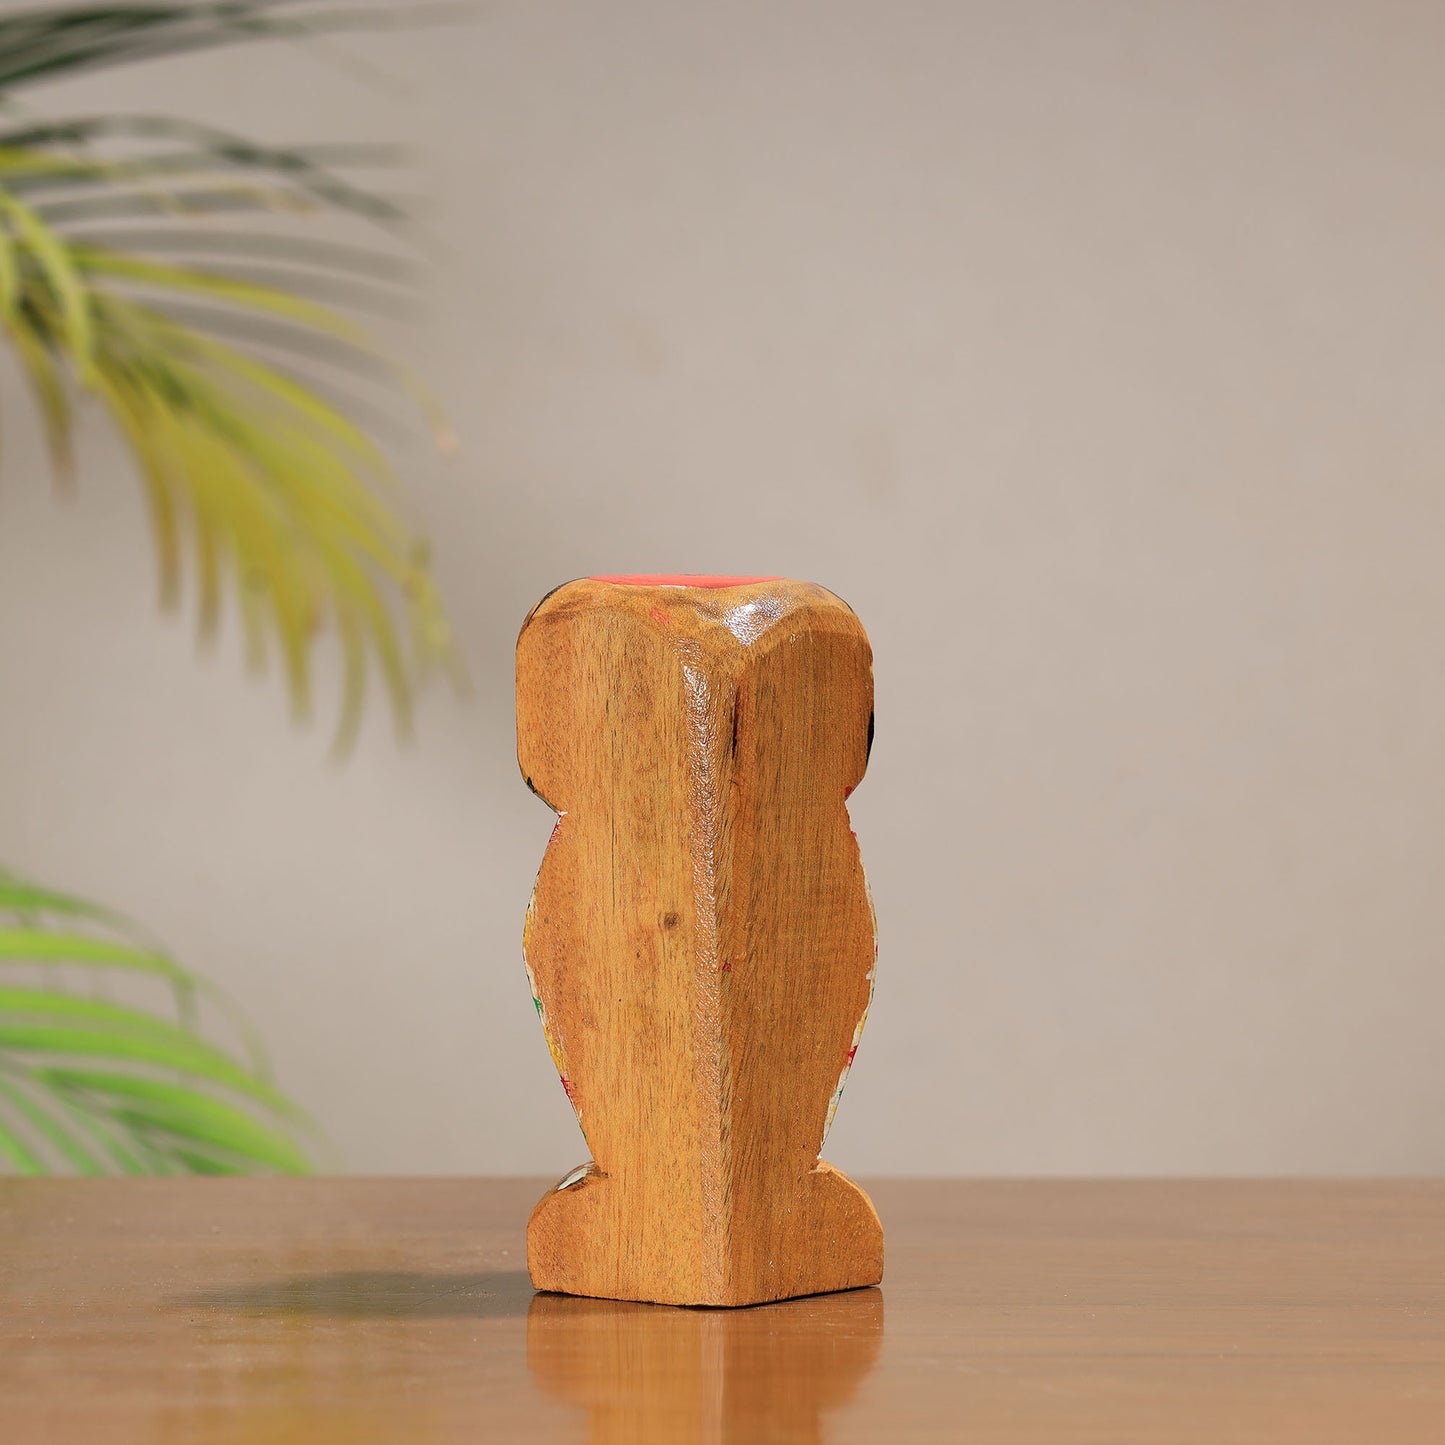 Owl - Traditional Burdwan Wood Craft Handpainted Sculpture (Medium) 26